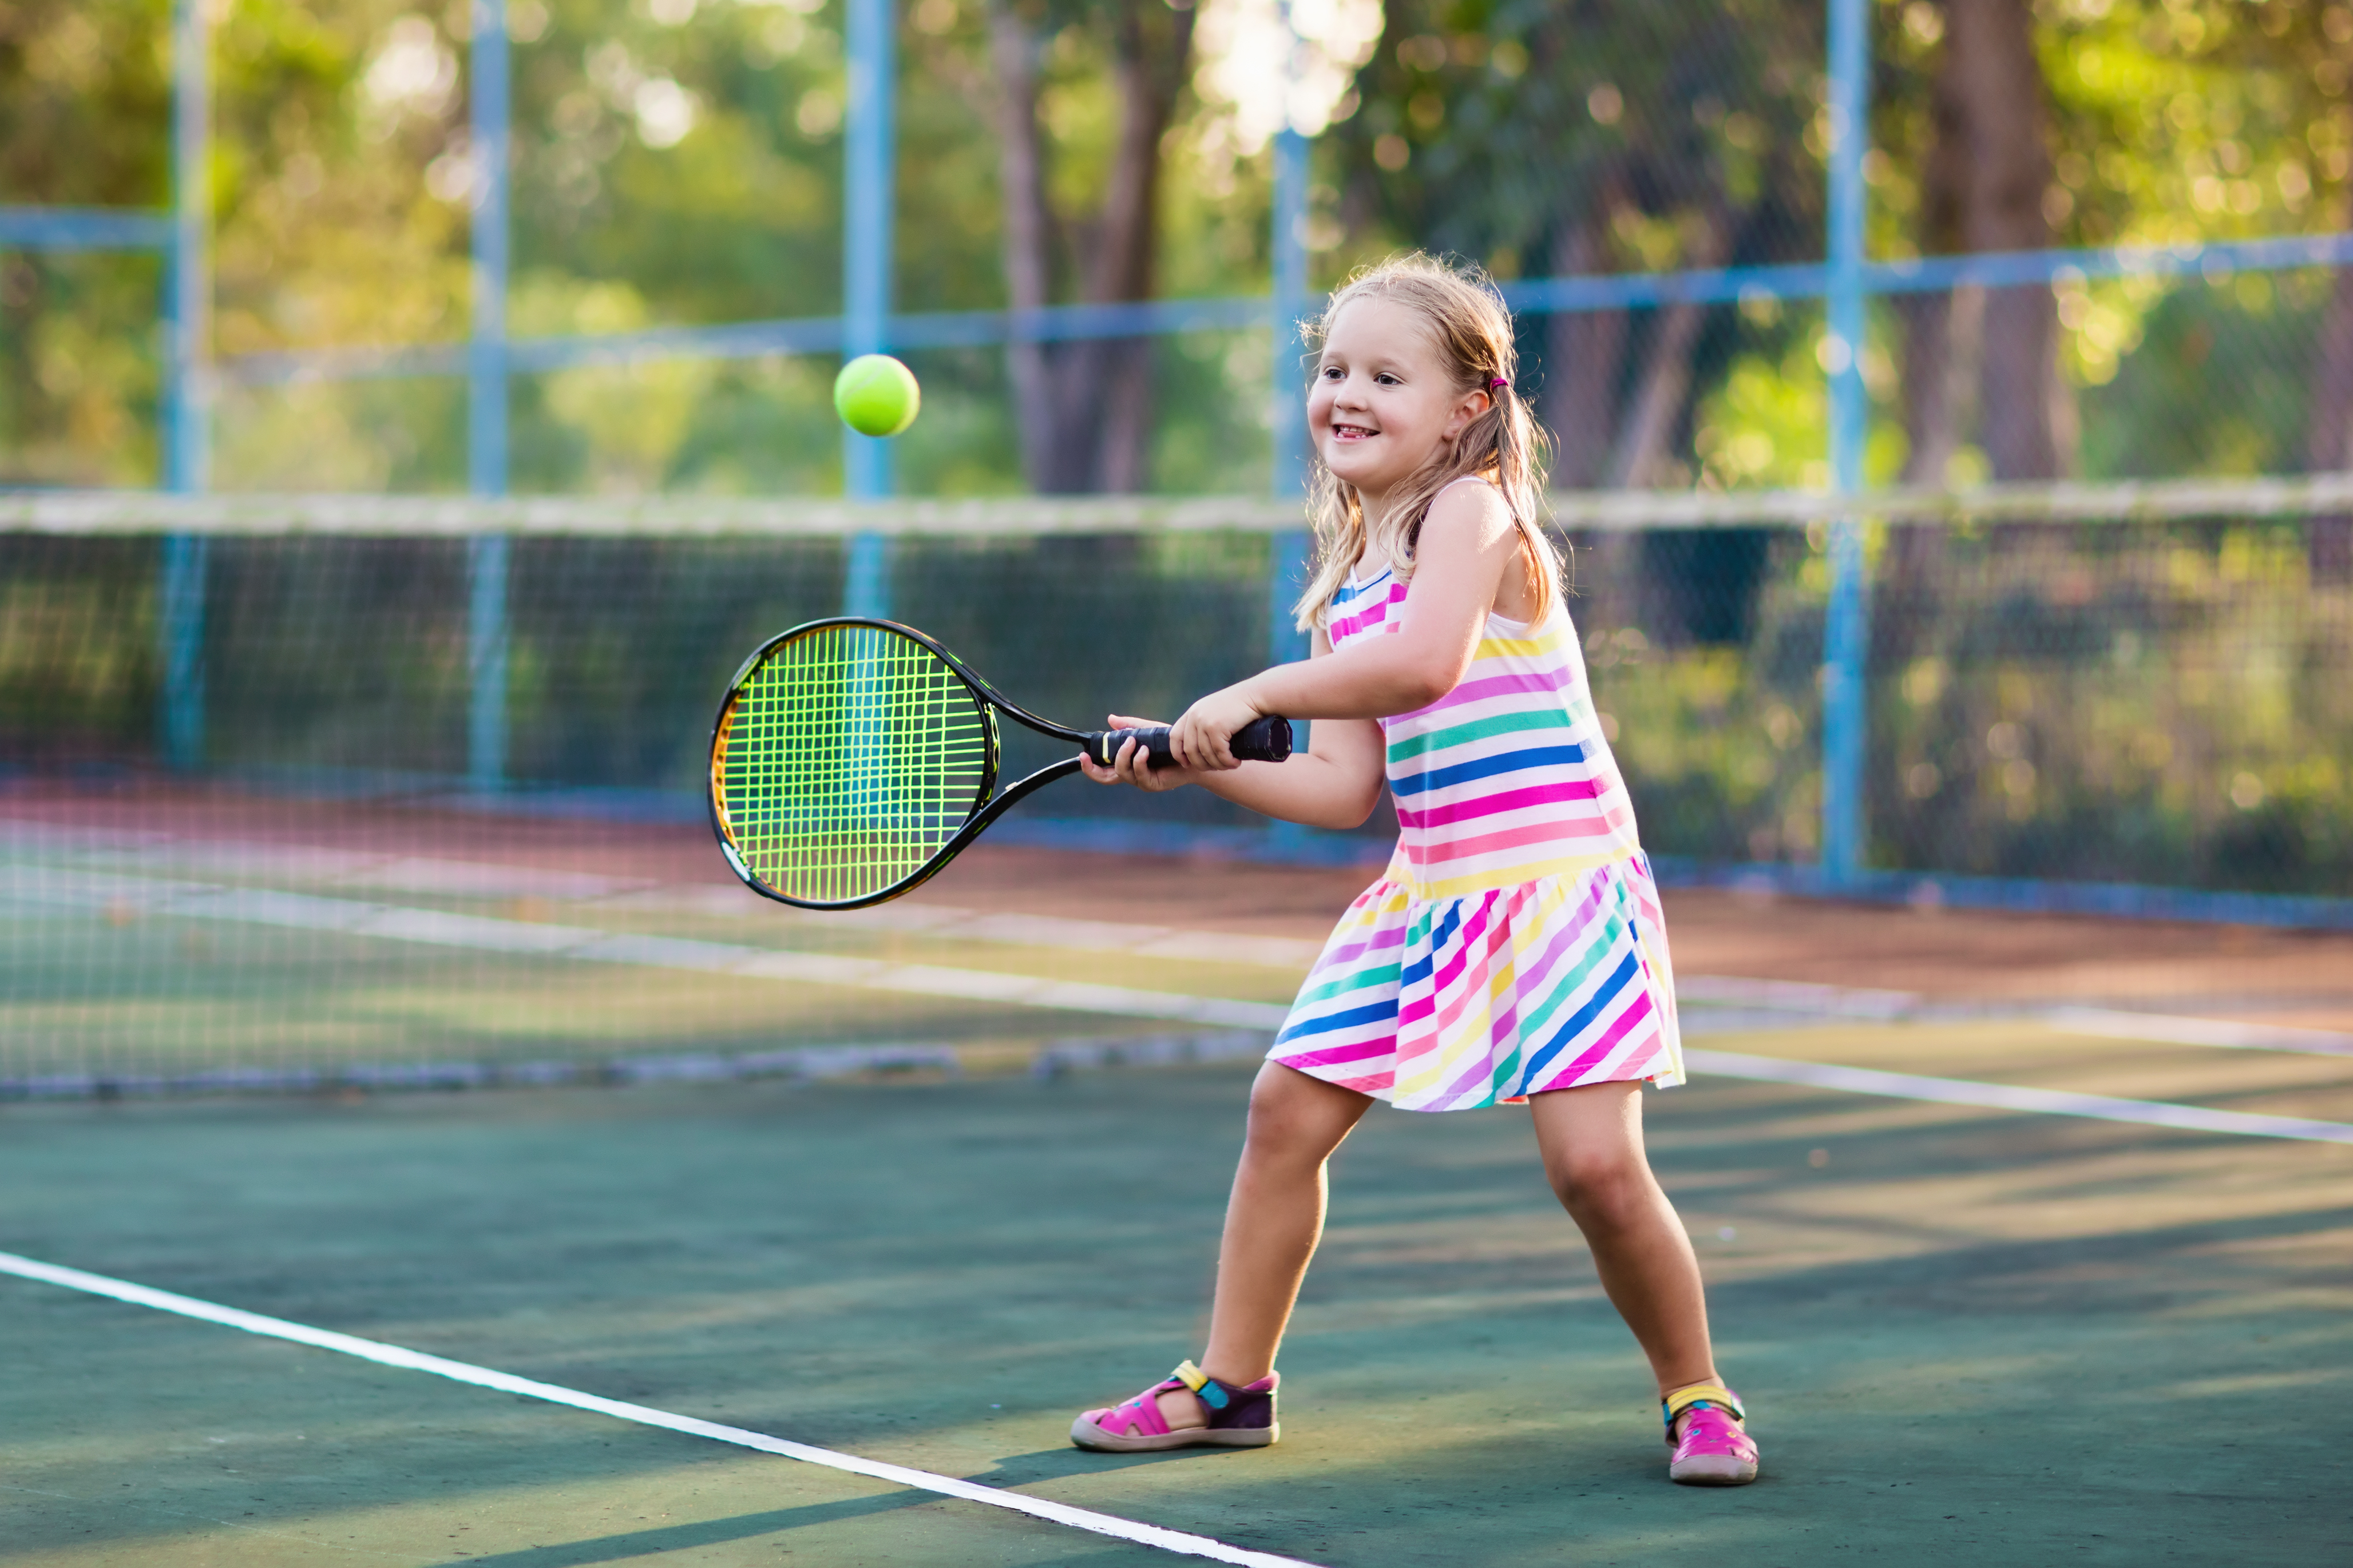 A little girl playing tennis on a court | Source: Shutterstock